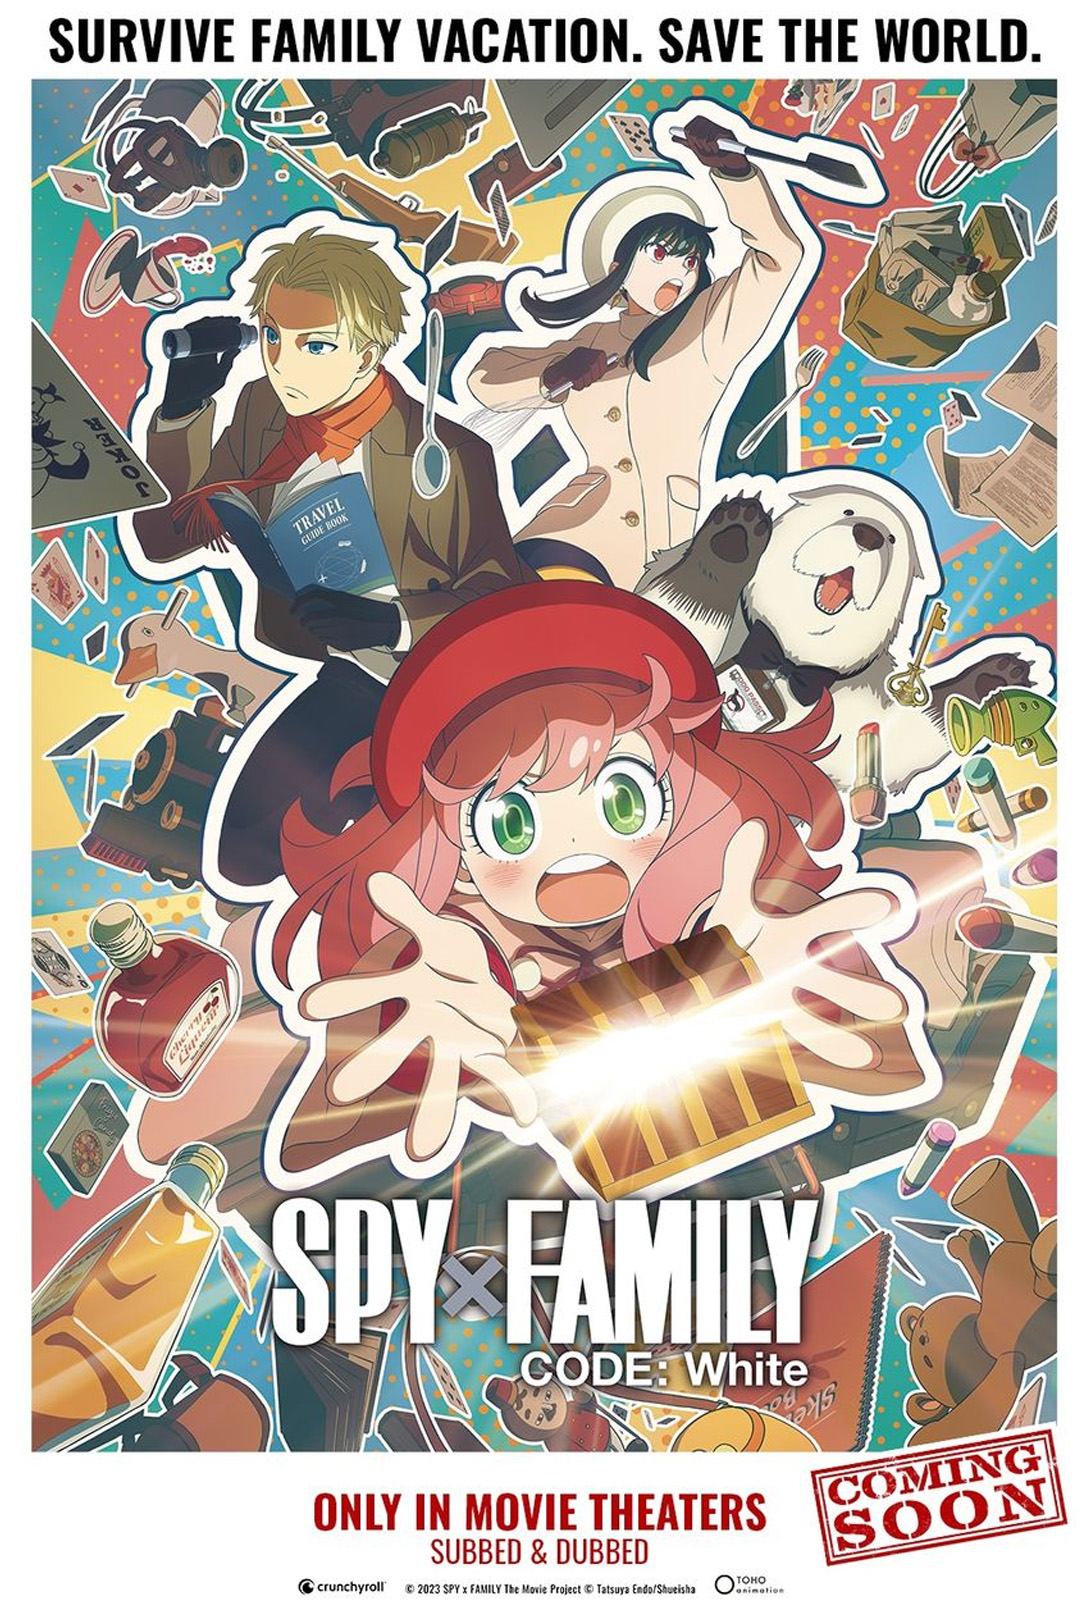 Movie Poster: Spy x Family Code: White